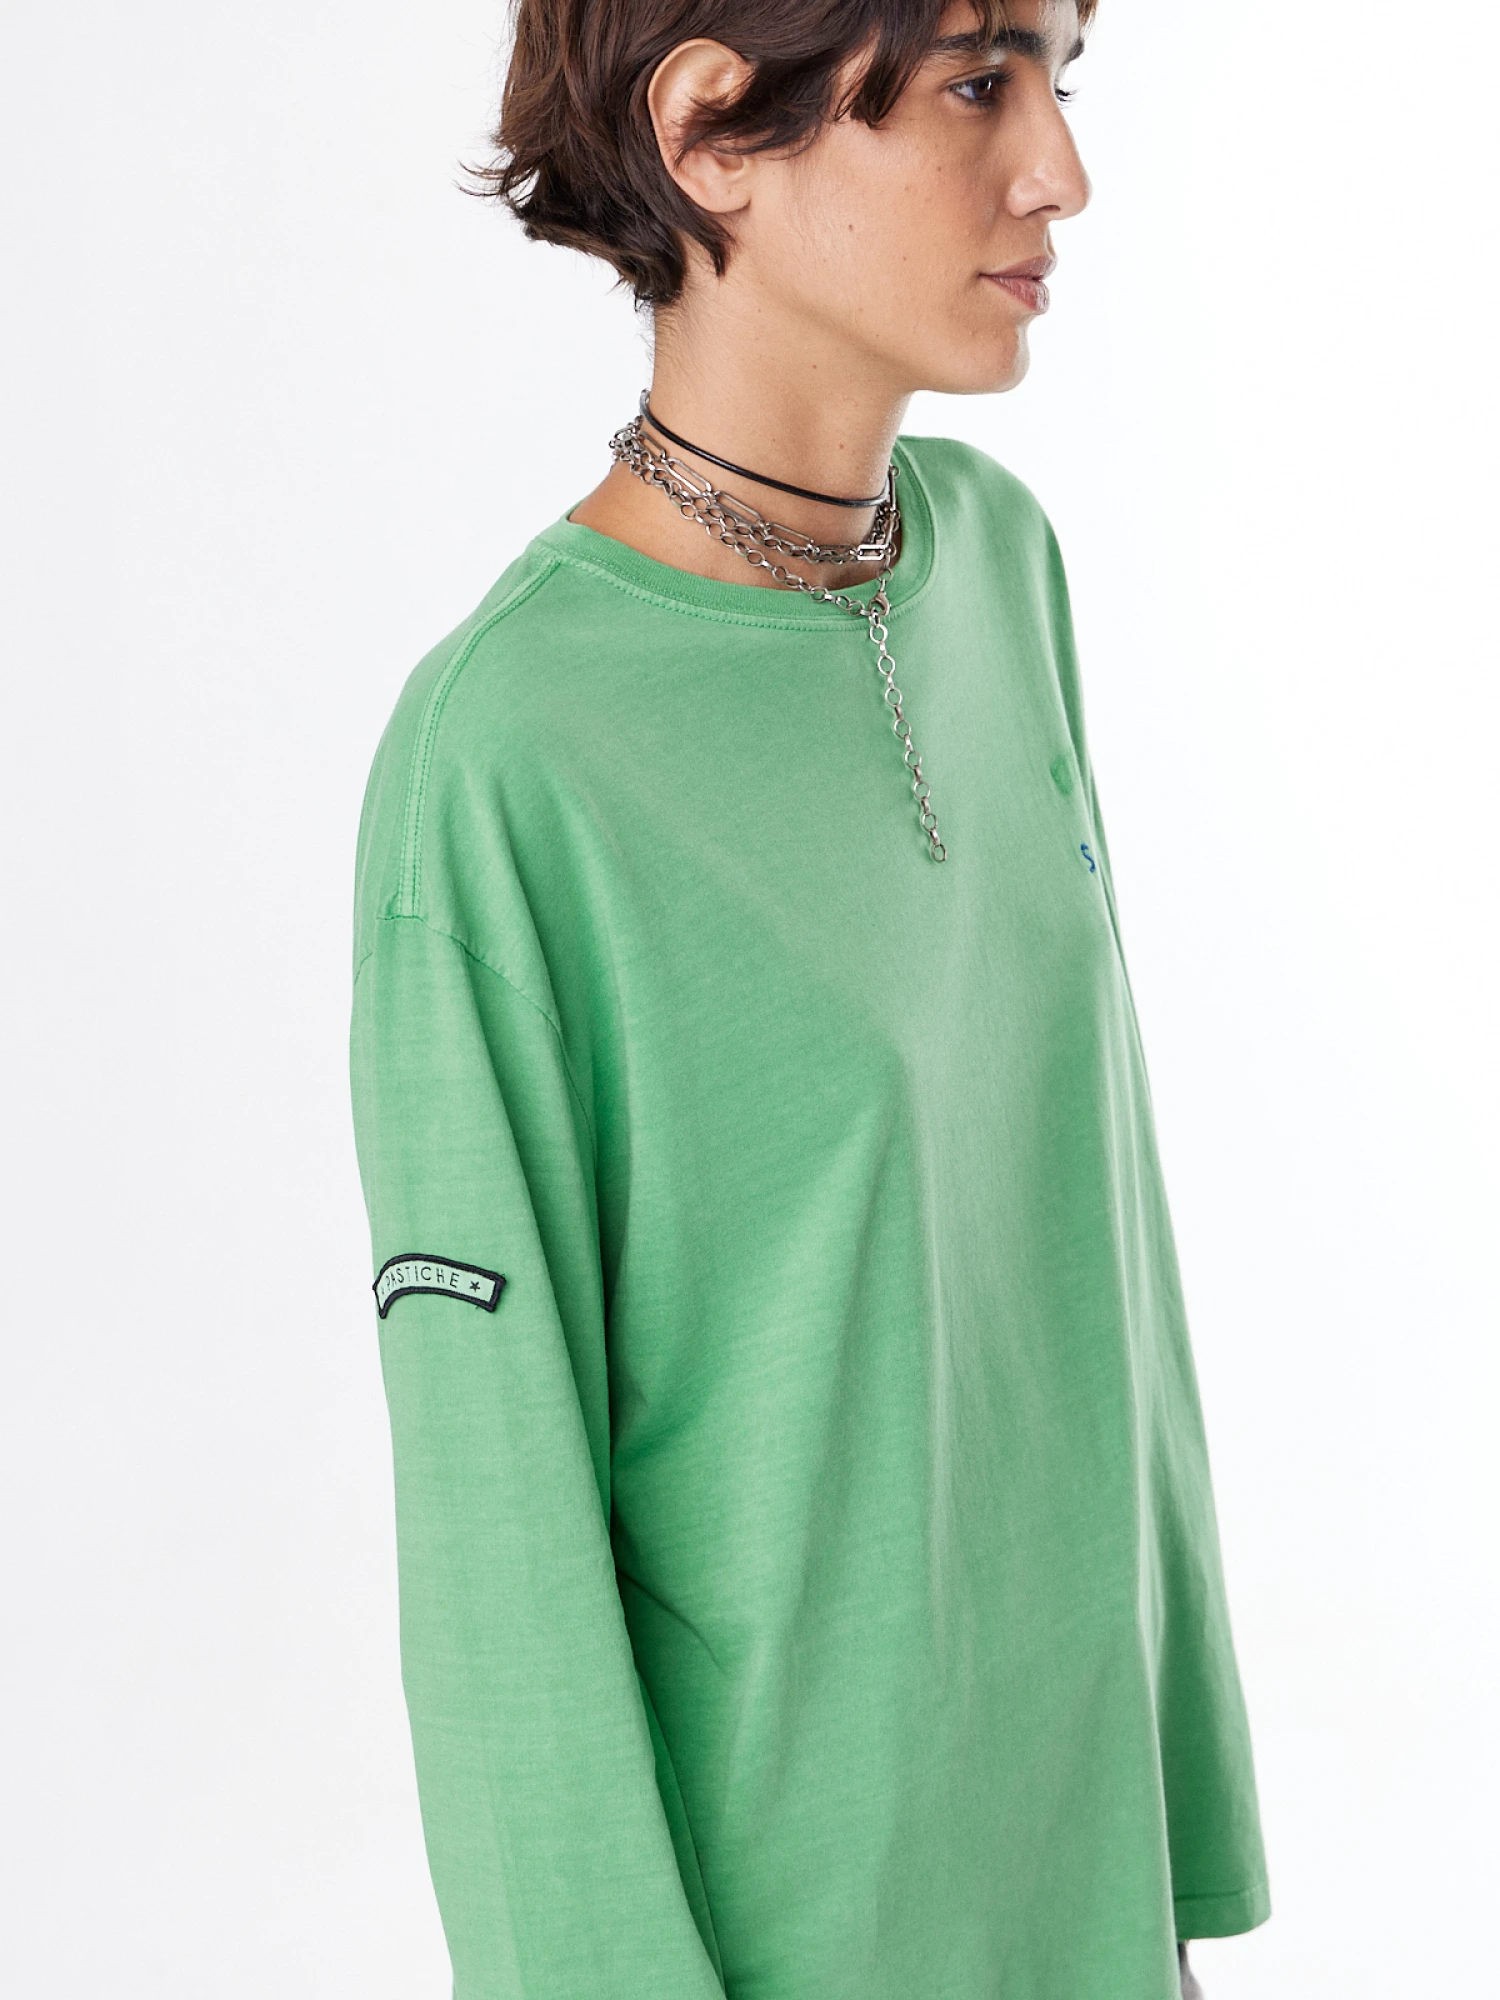 T-shirt Prince verde s